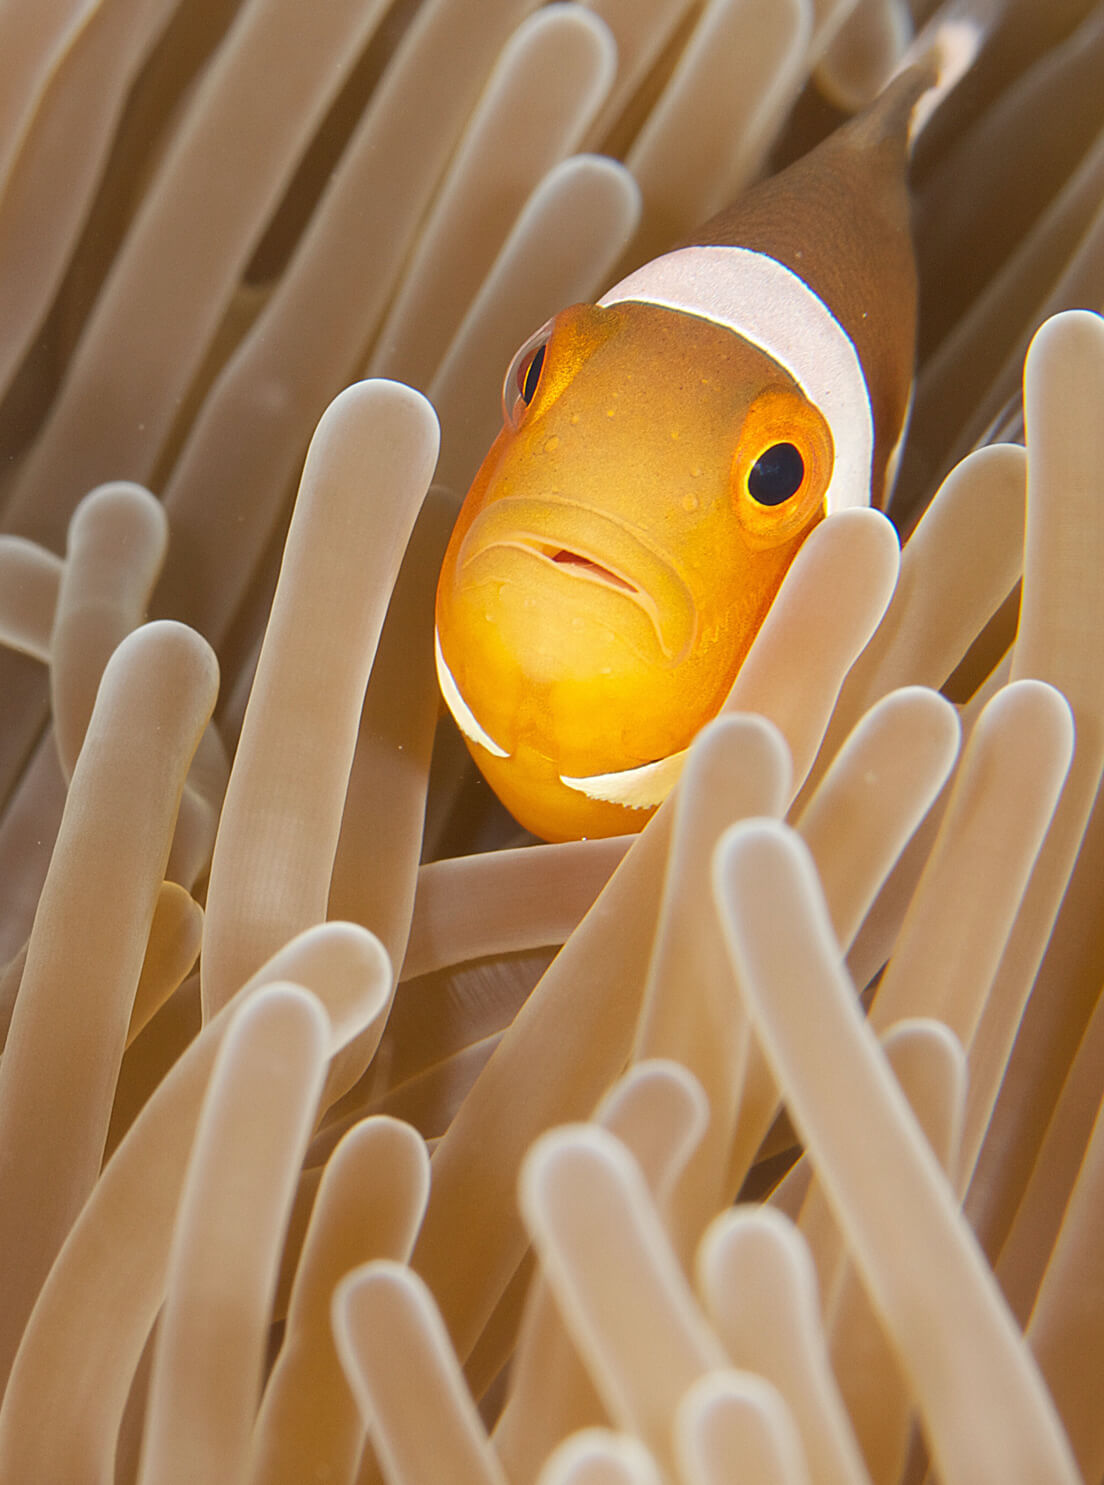 A photo of a clown fish swimming through coral